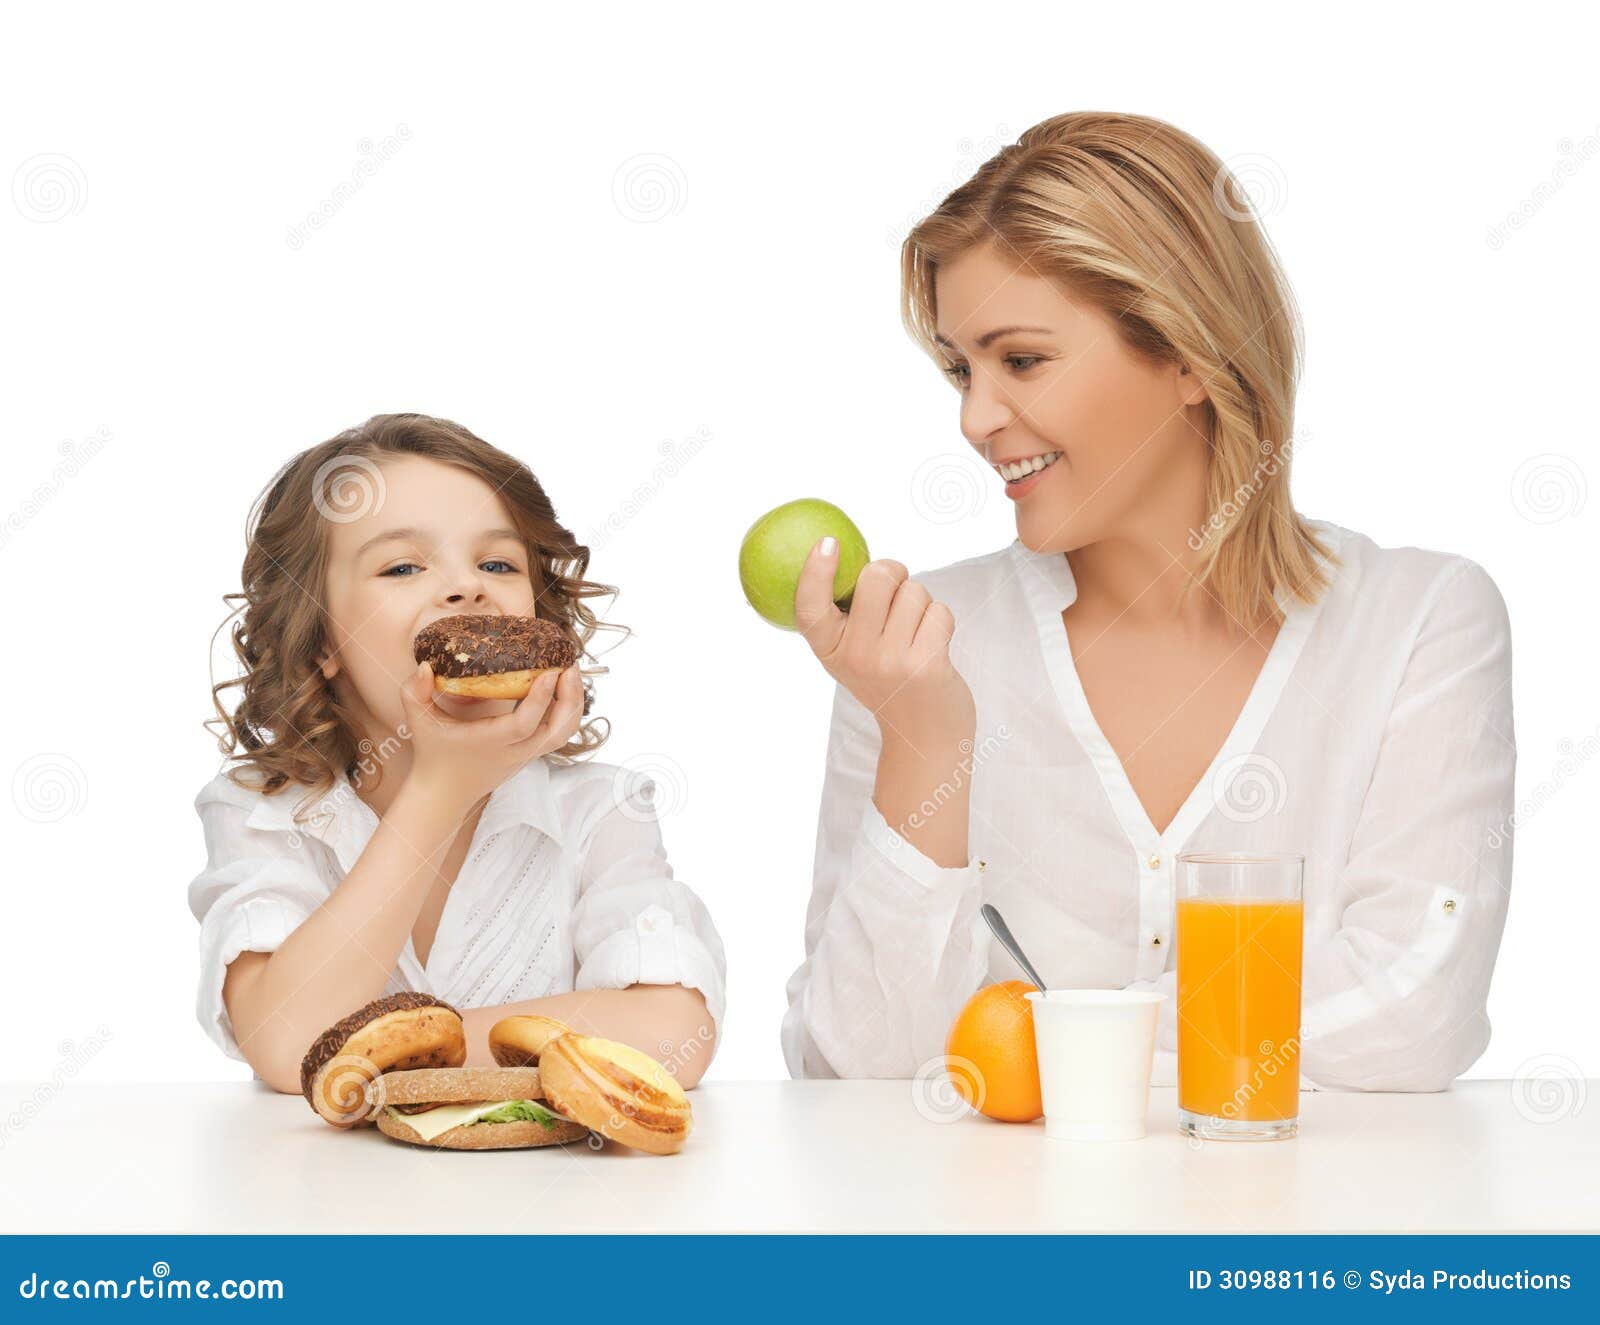 mother-daughter-healthy-unhealthy-food-30988116.jpg